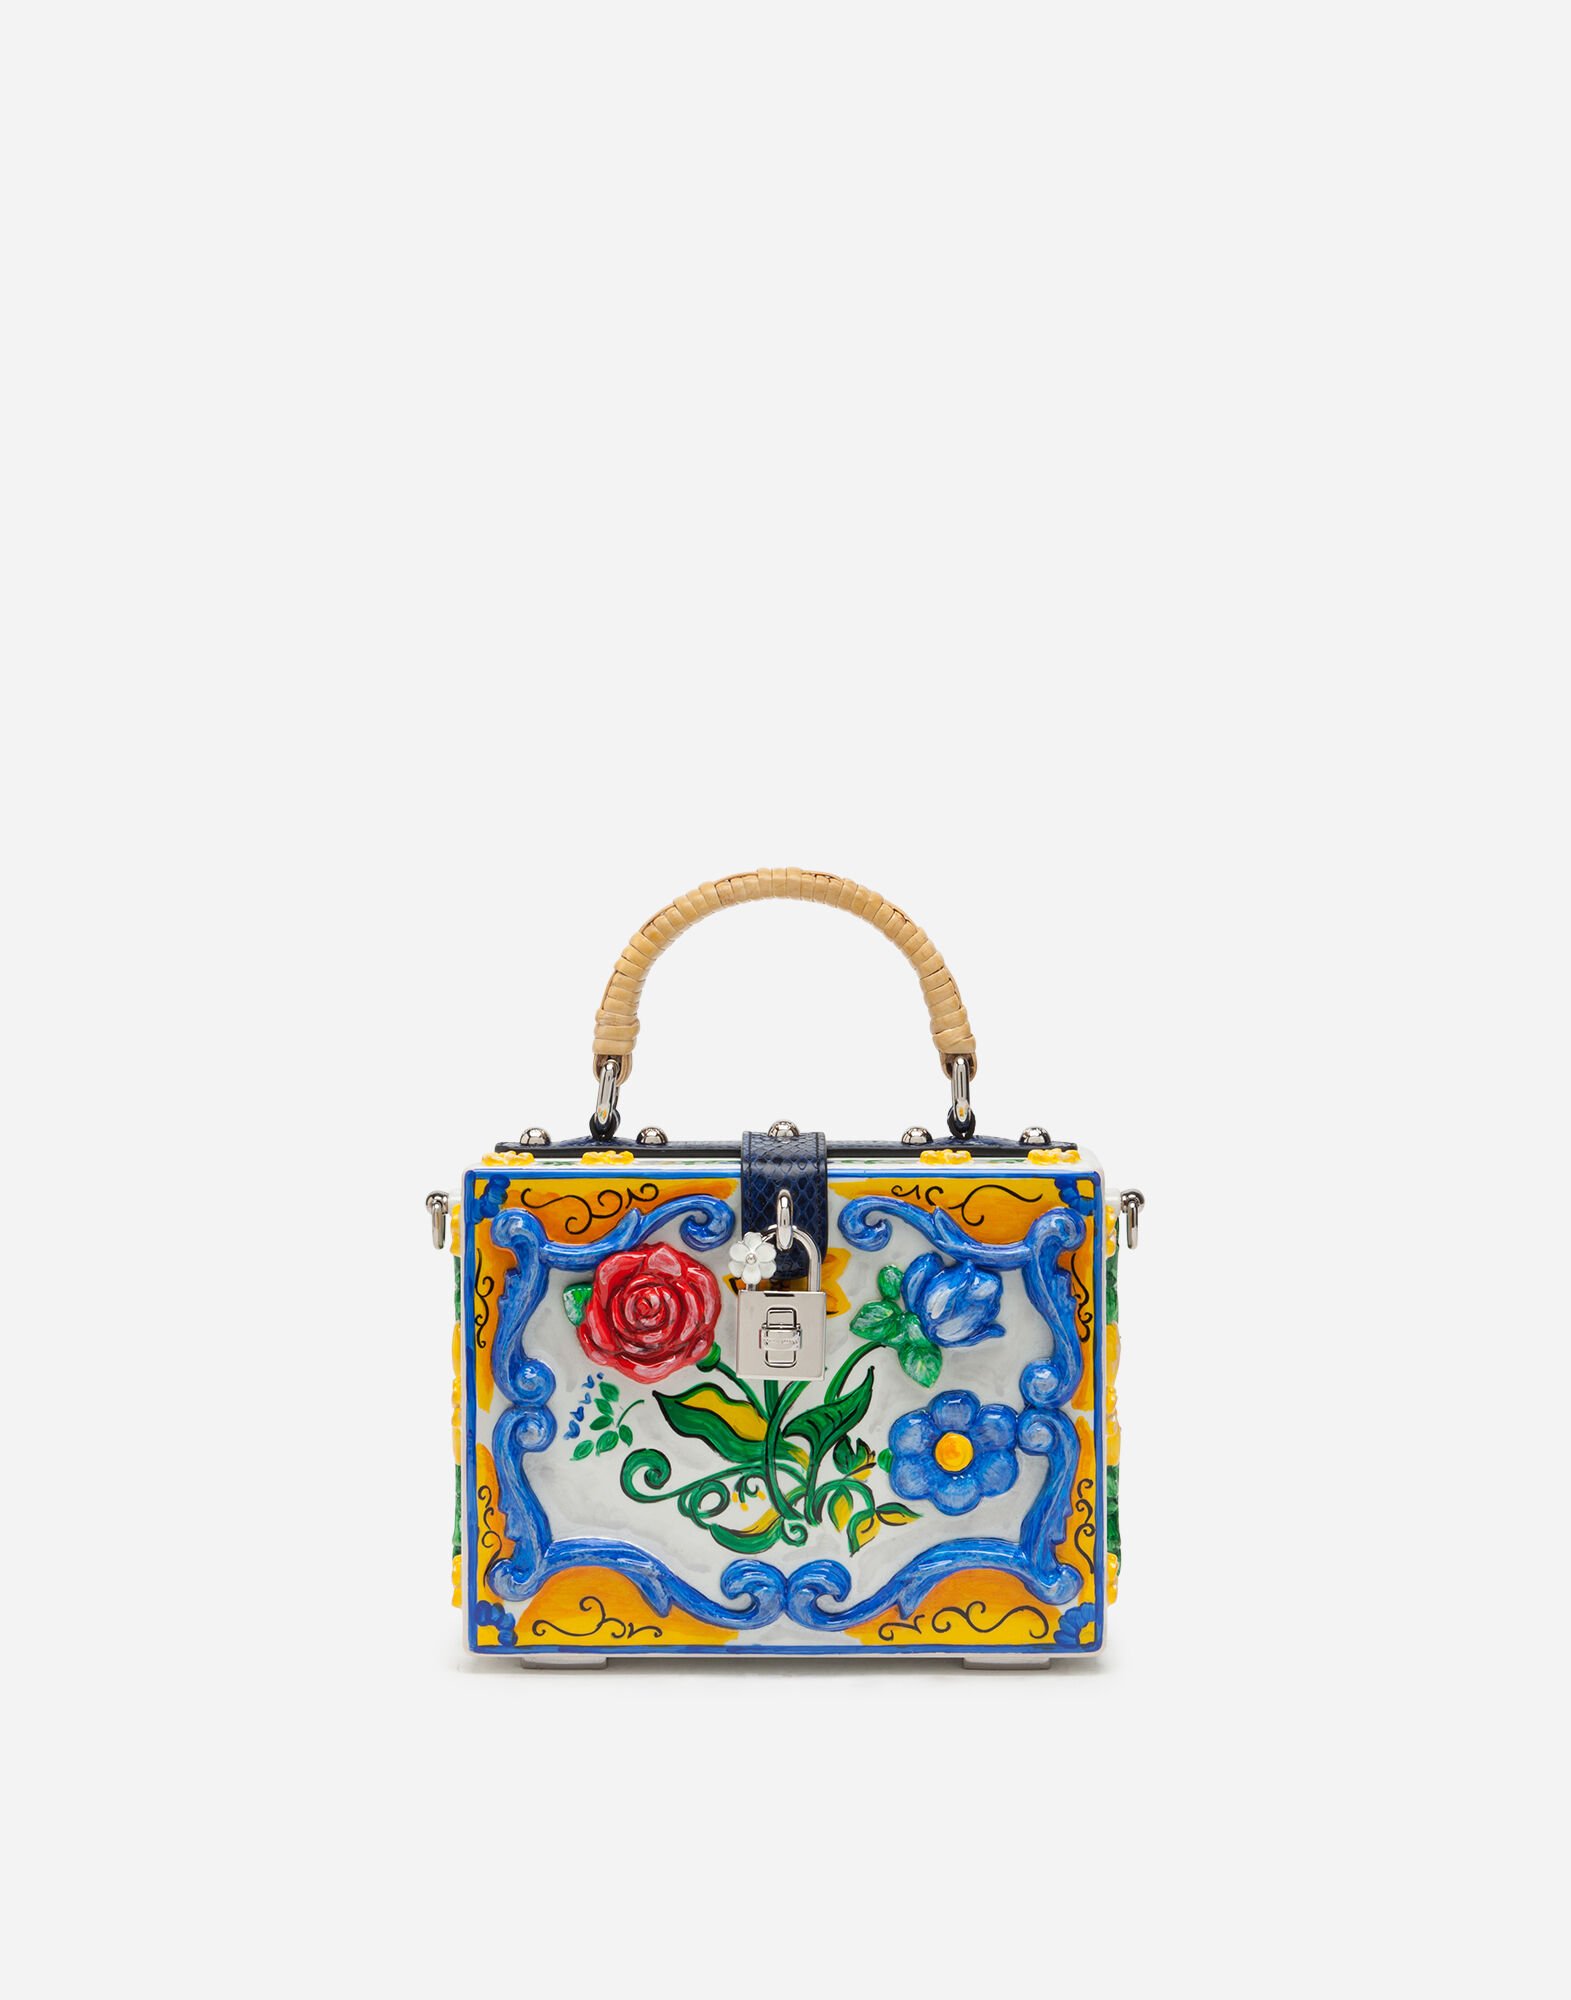 Dolce & Gabbana Tasche Dolce Box aus holz handbemalt majolika ROSA BB6003A1001